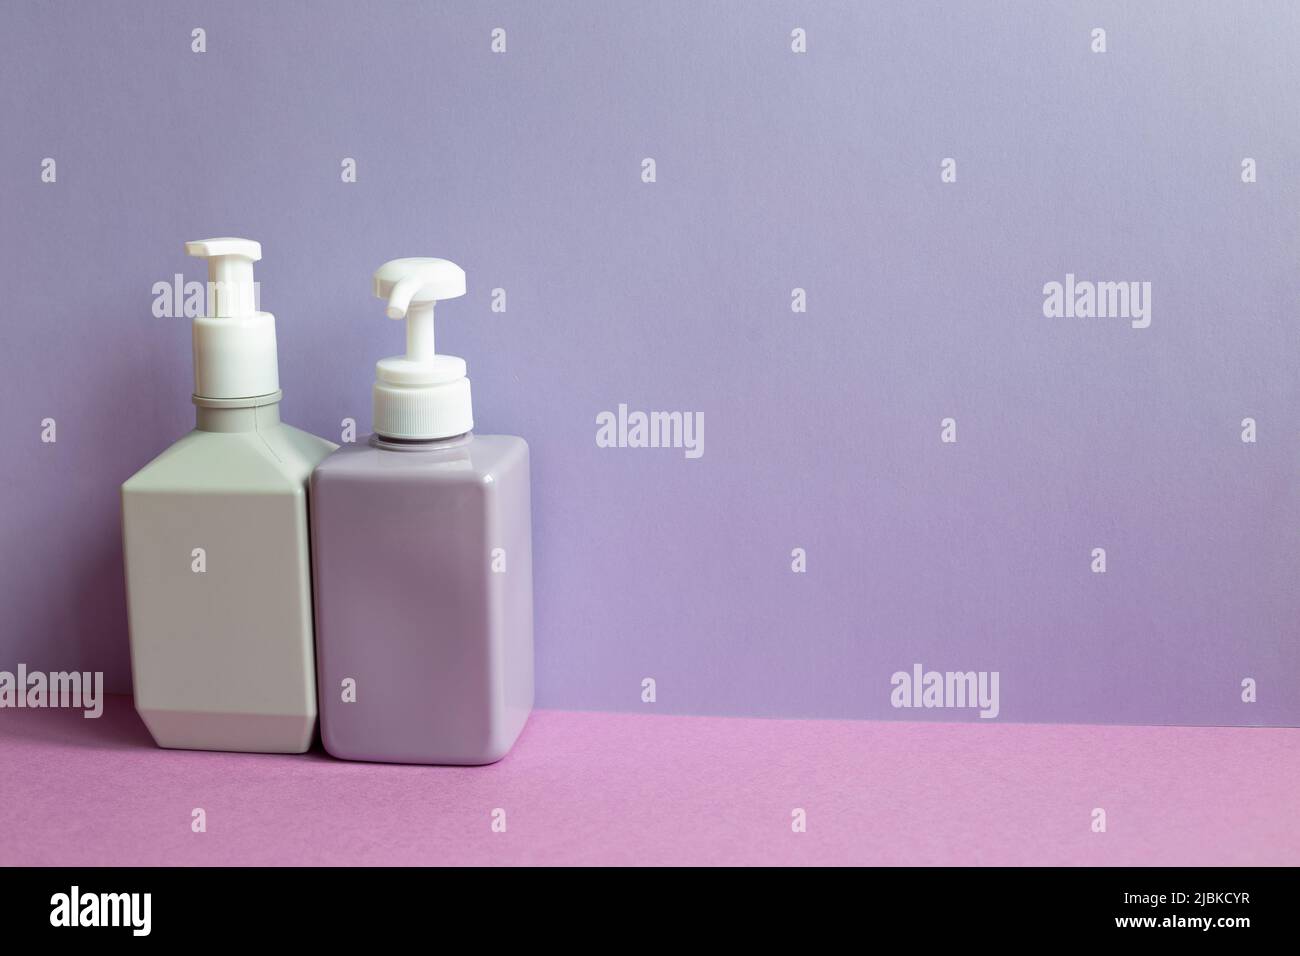 Plastic shampoo bottles on purple table. purple wall background Stock Photo